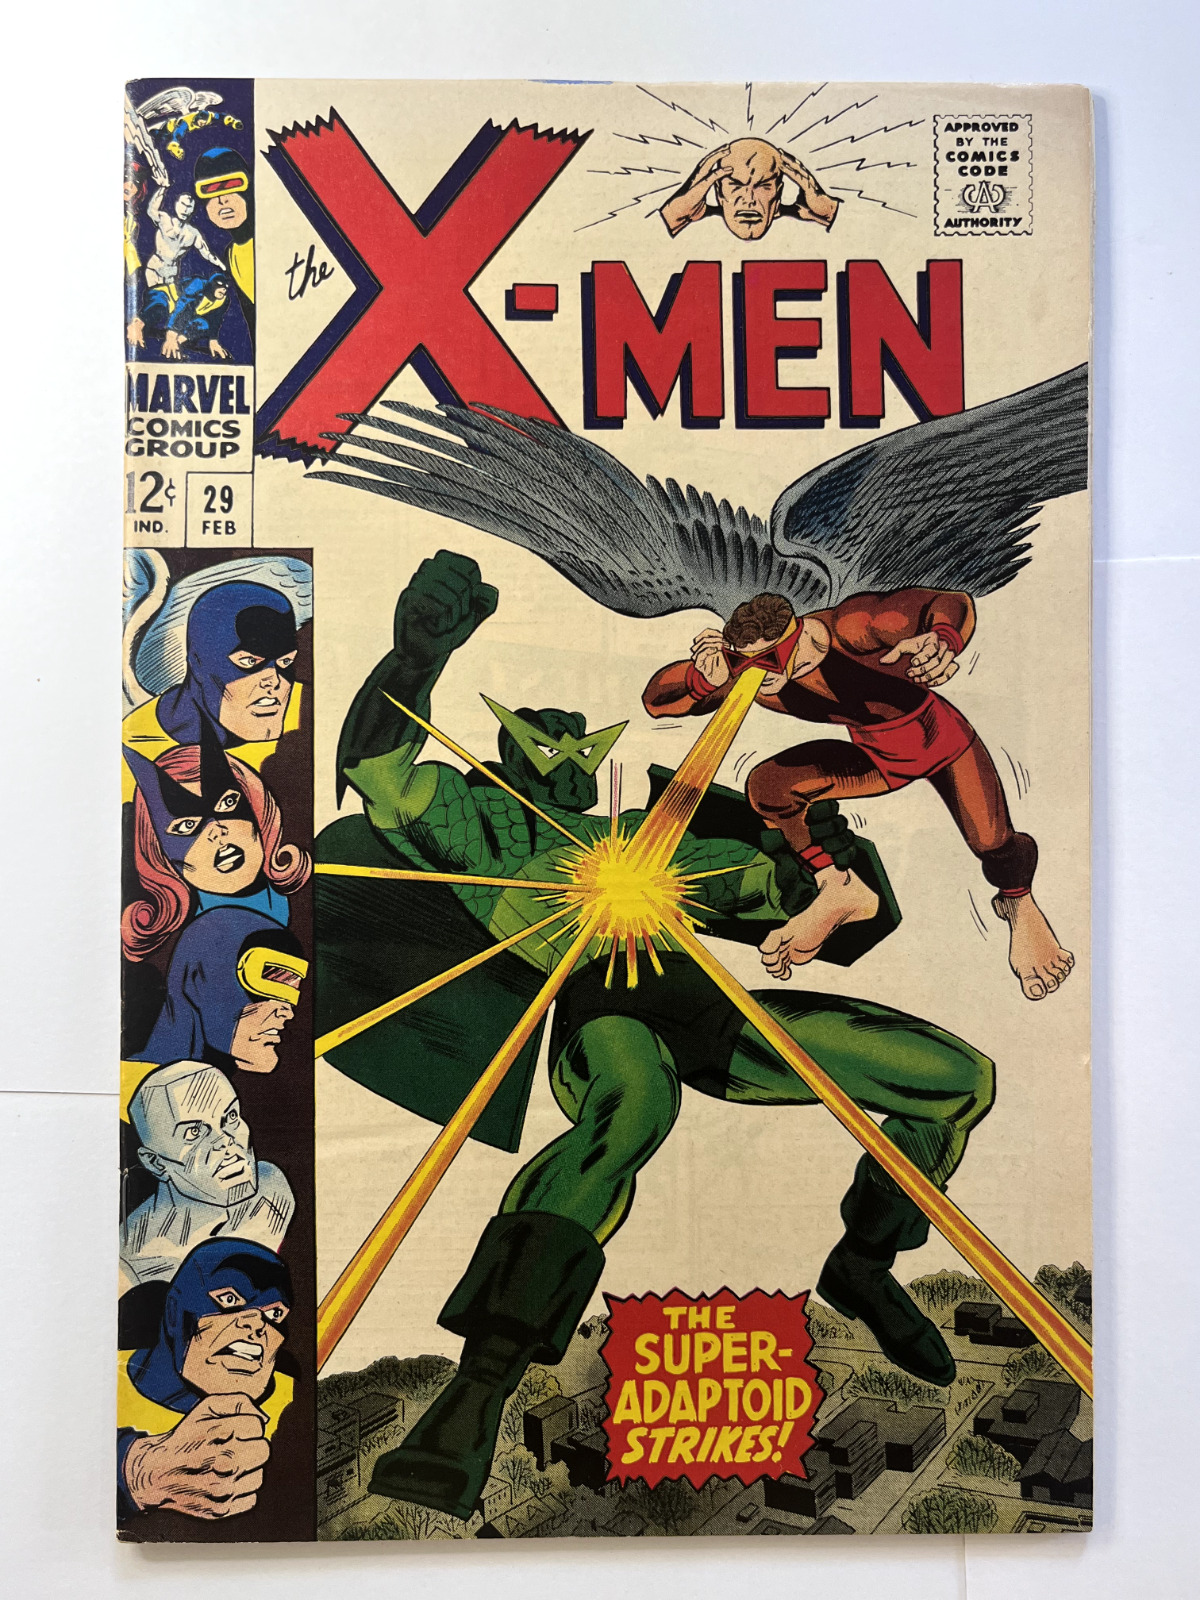 Marvel ComicsX-MEN #29 (1967) - Very Good - SUPER-ADAPTOID AND MIMIC APPEARANCE